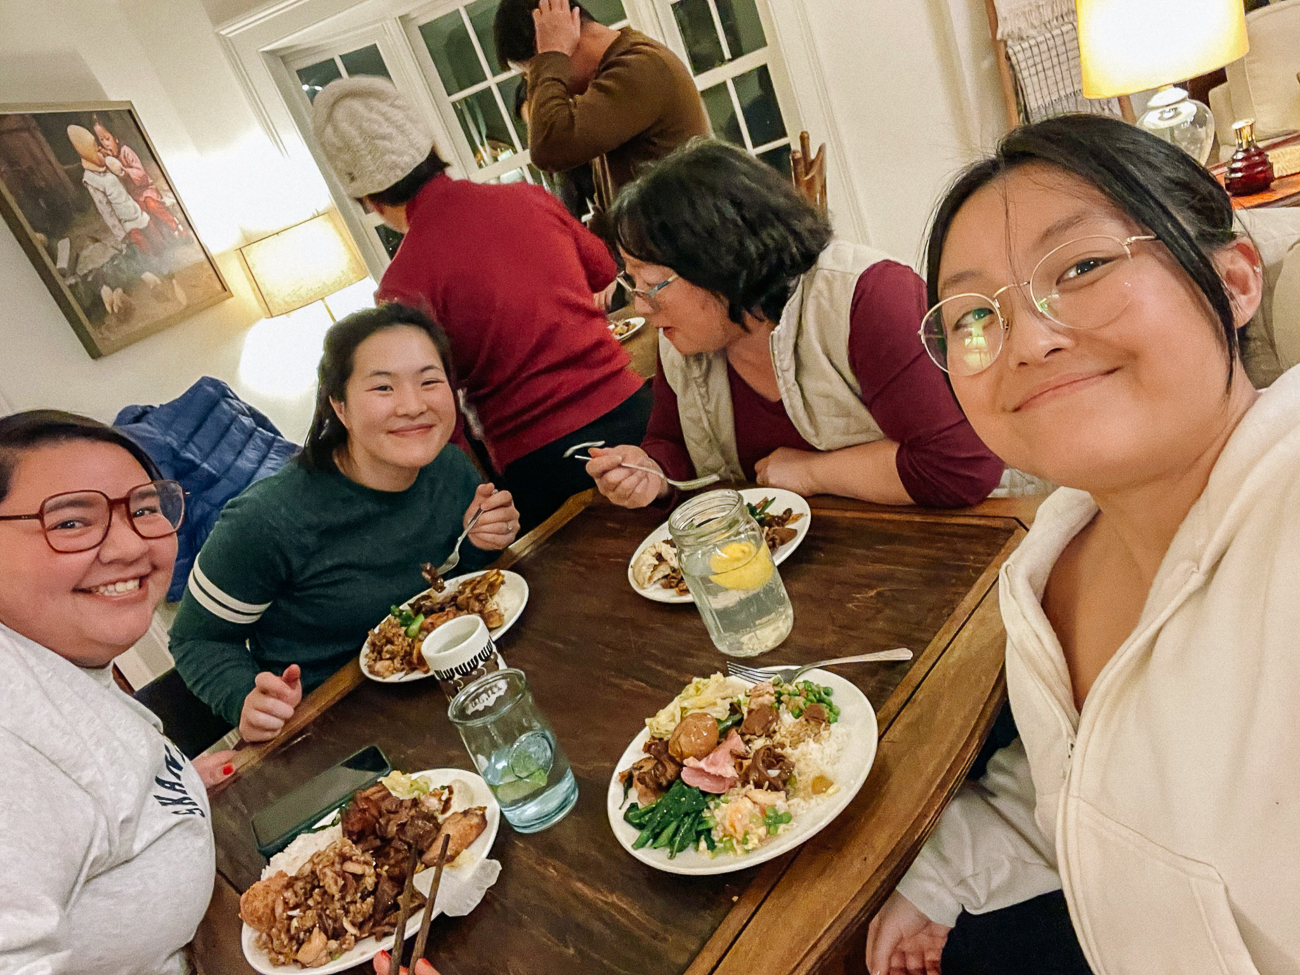 Sarah, Kaitlin, and family enjoying dinner